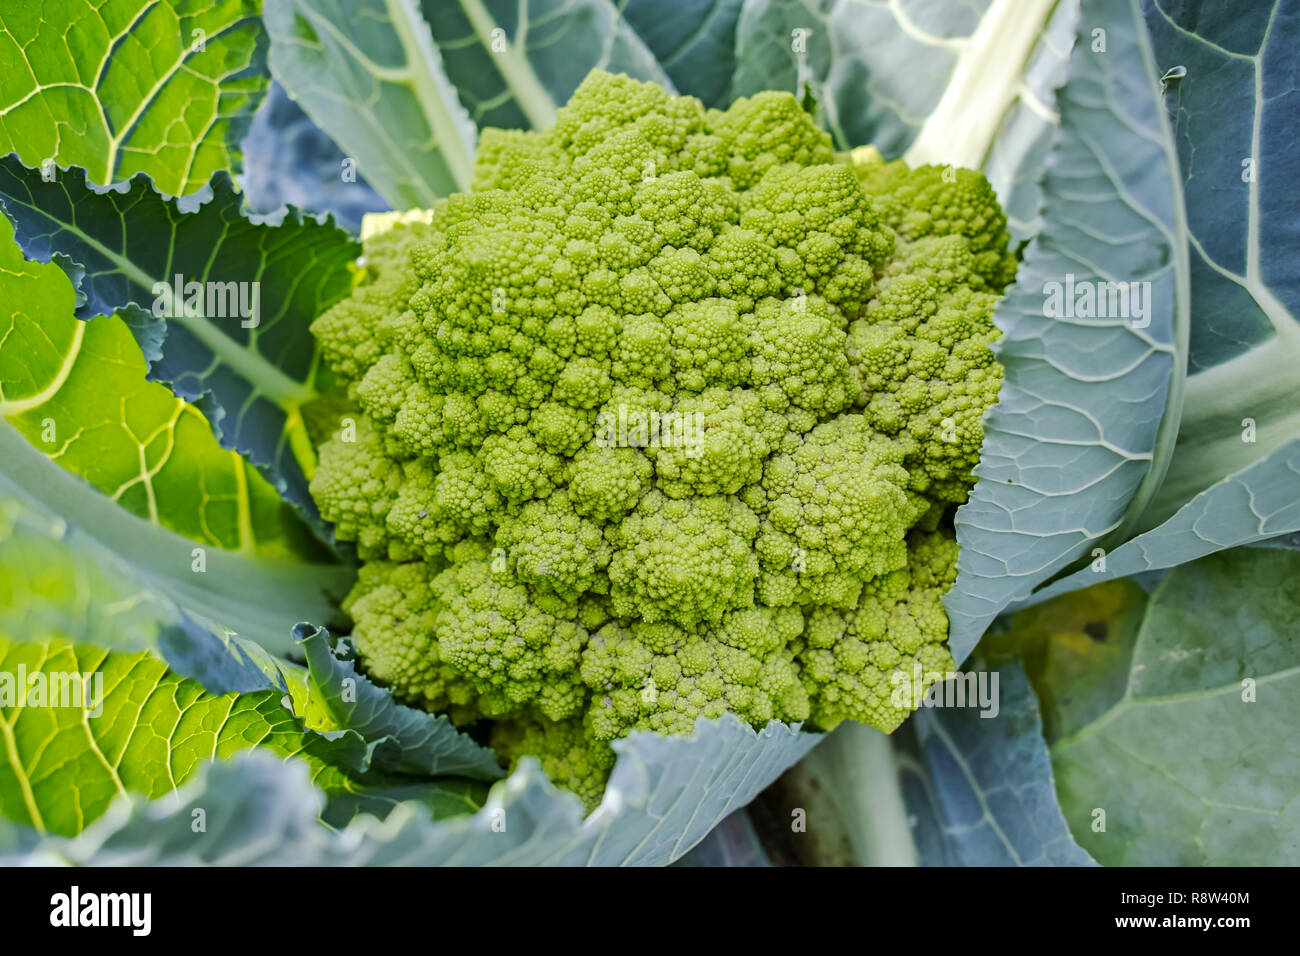 Organic ripe green Romanesco broccoli or Roman cauliflower, Broccolo Romanesco, Romanesque cauliflower growing on field, new harvest Stock Photo